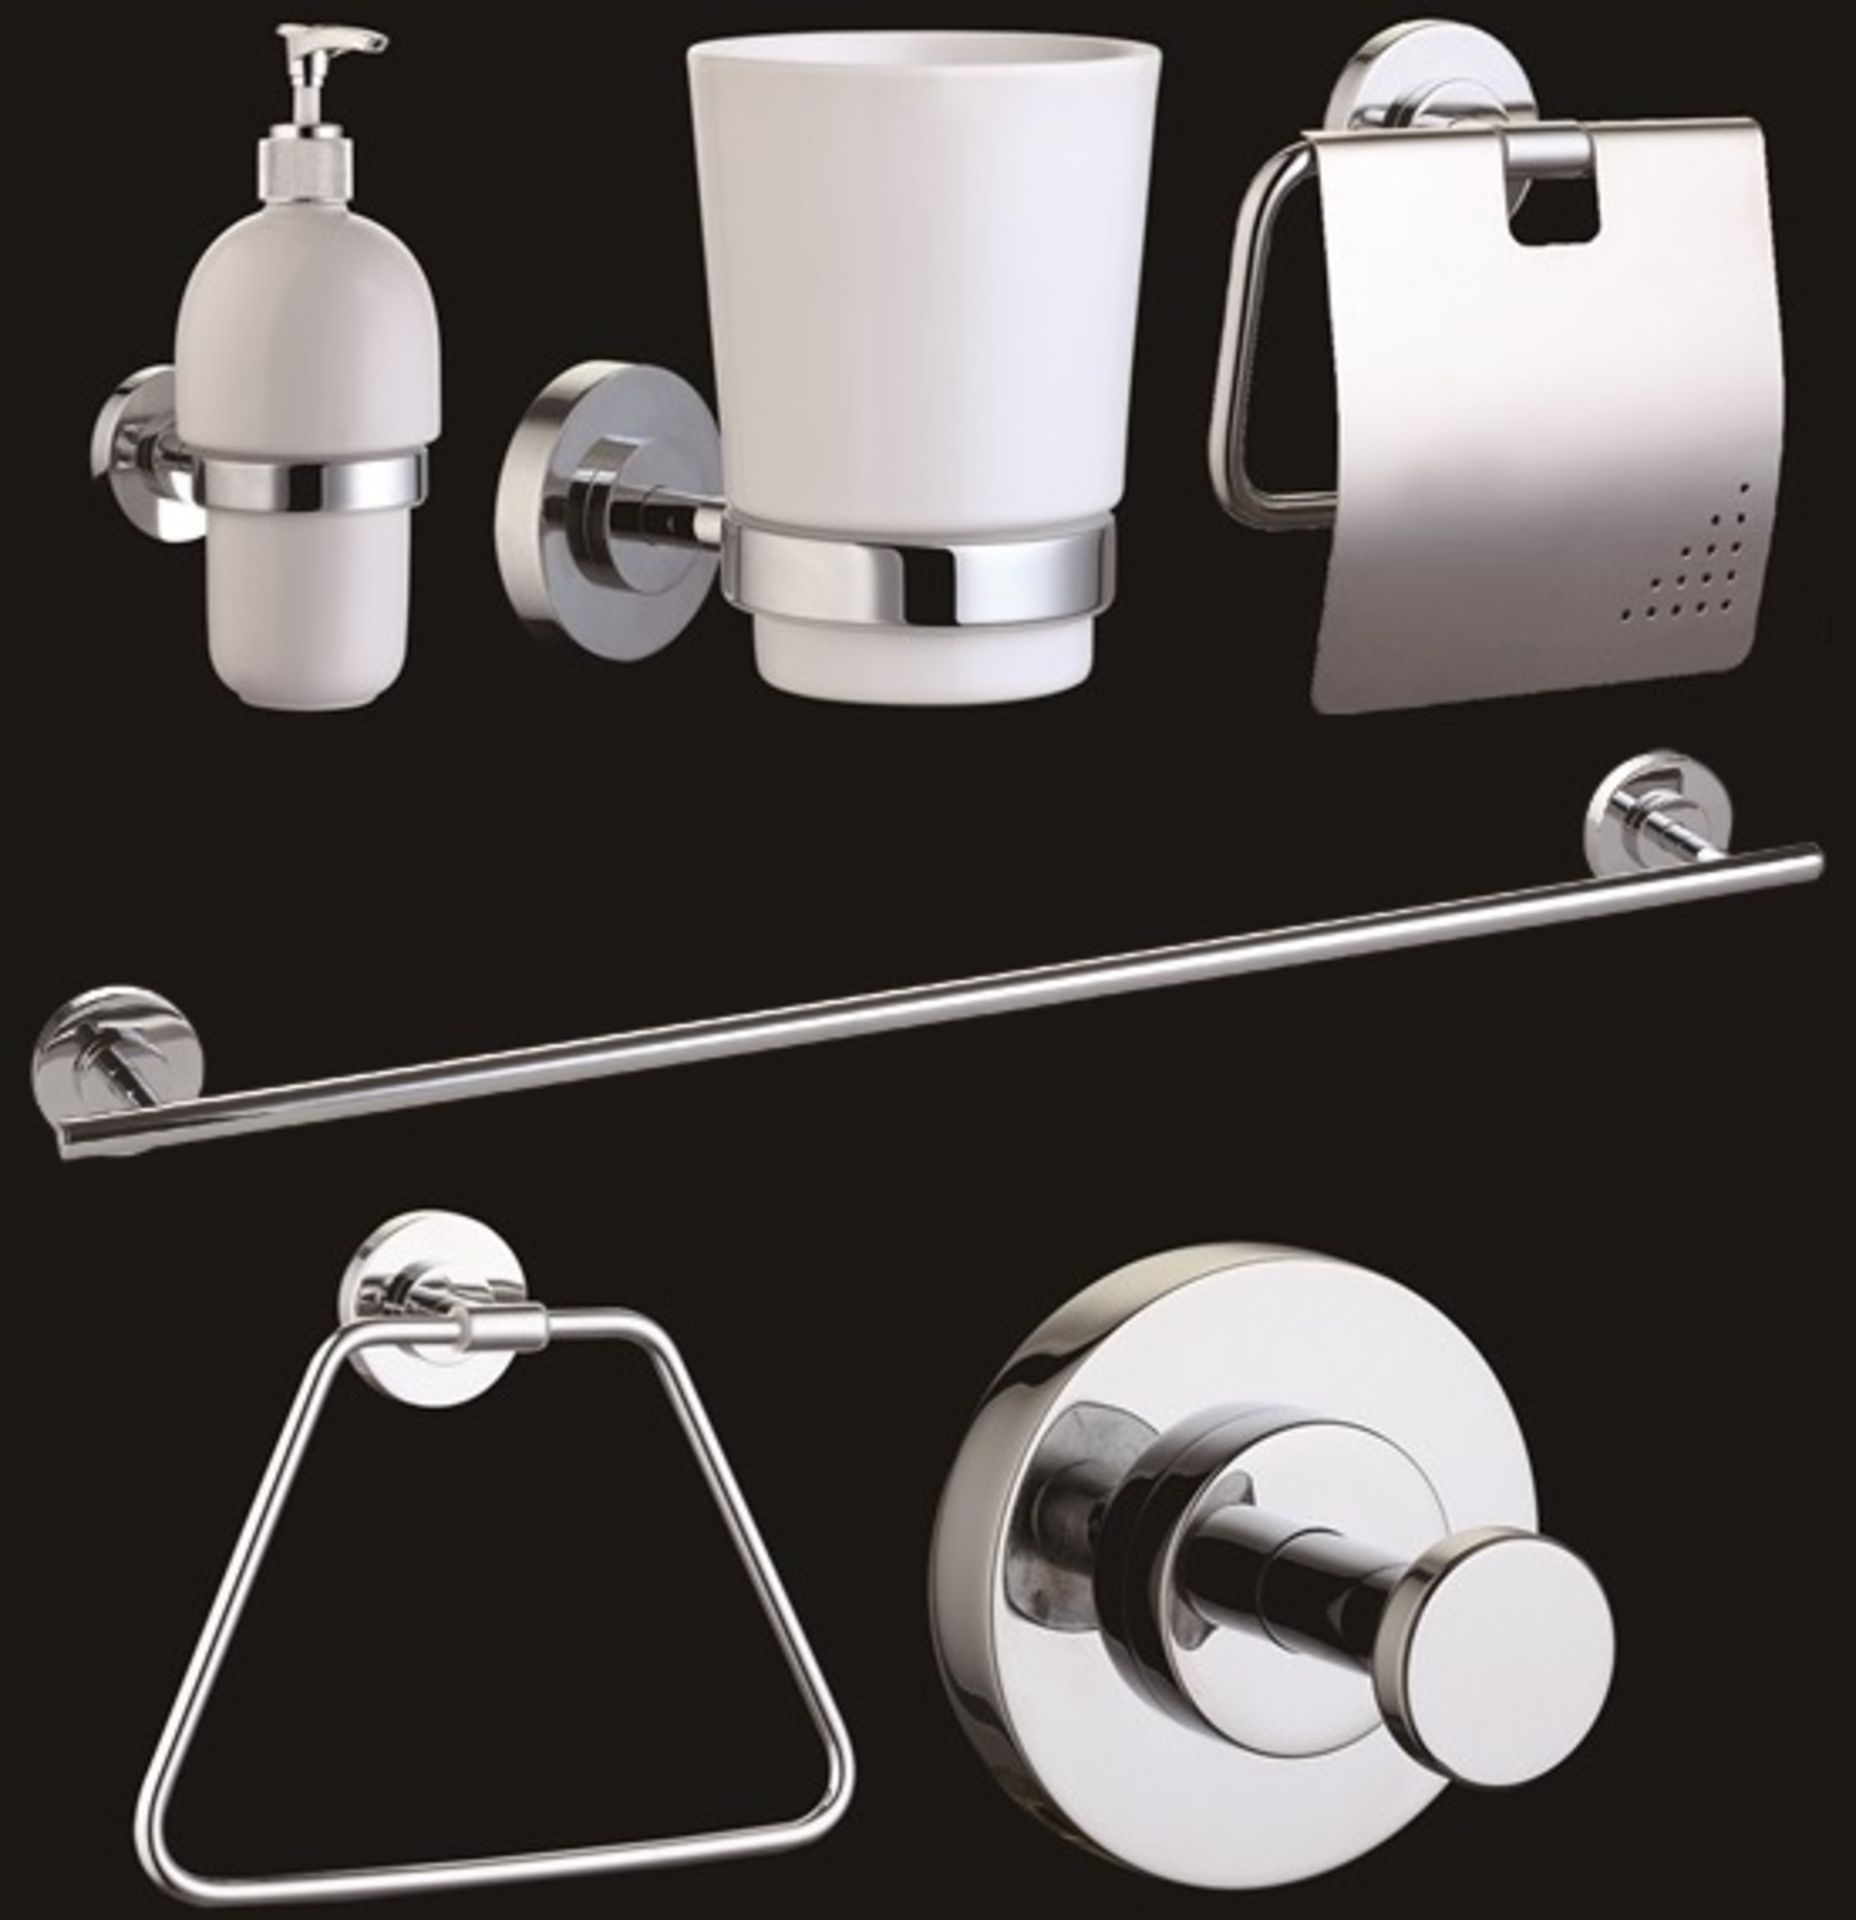 1 x Vogue Series 5 Six Piece Bathroom Accessory Set - Includes WC Roll Holder, Soap Dispenser,